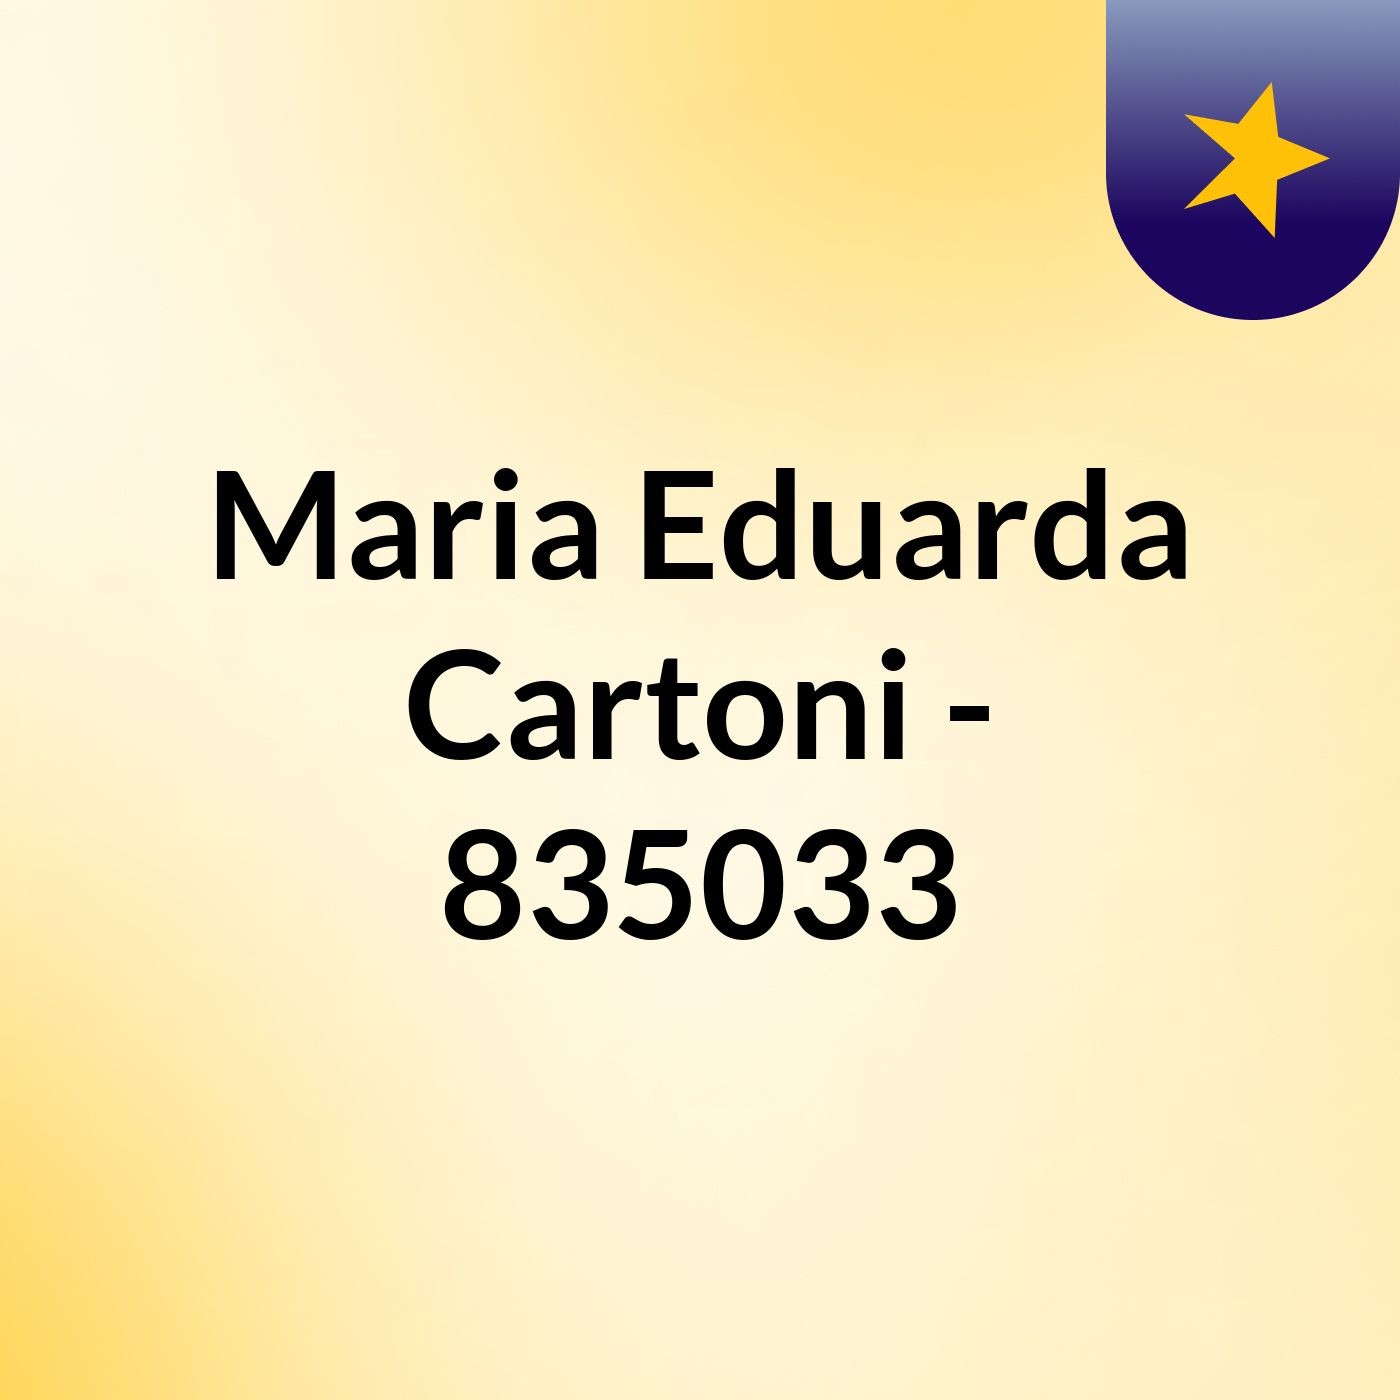 Maria Eduarda Cartoni - 835033